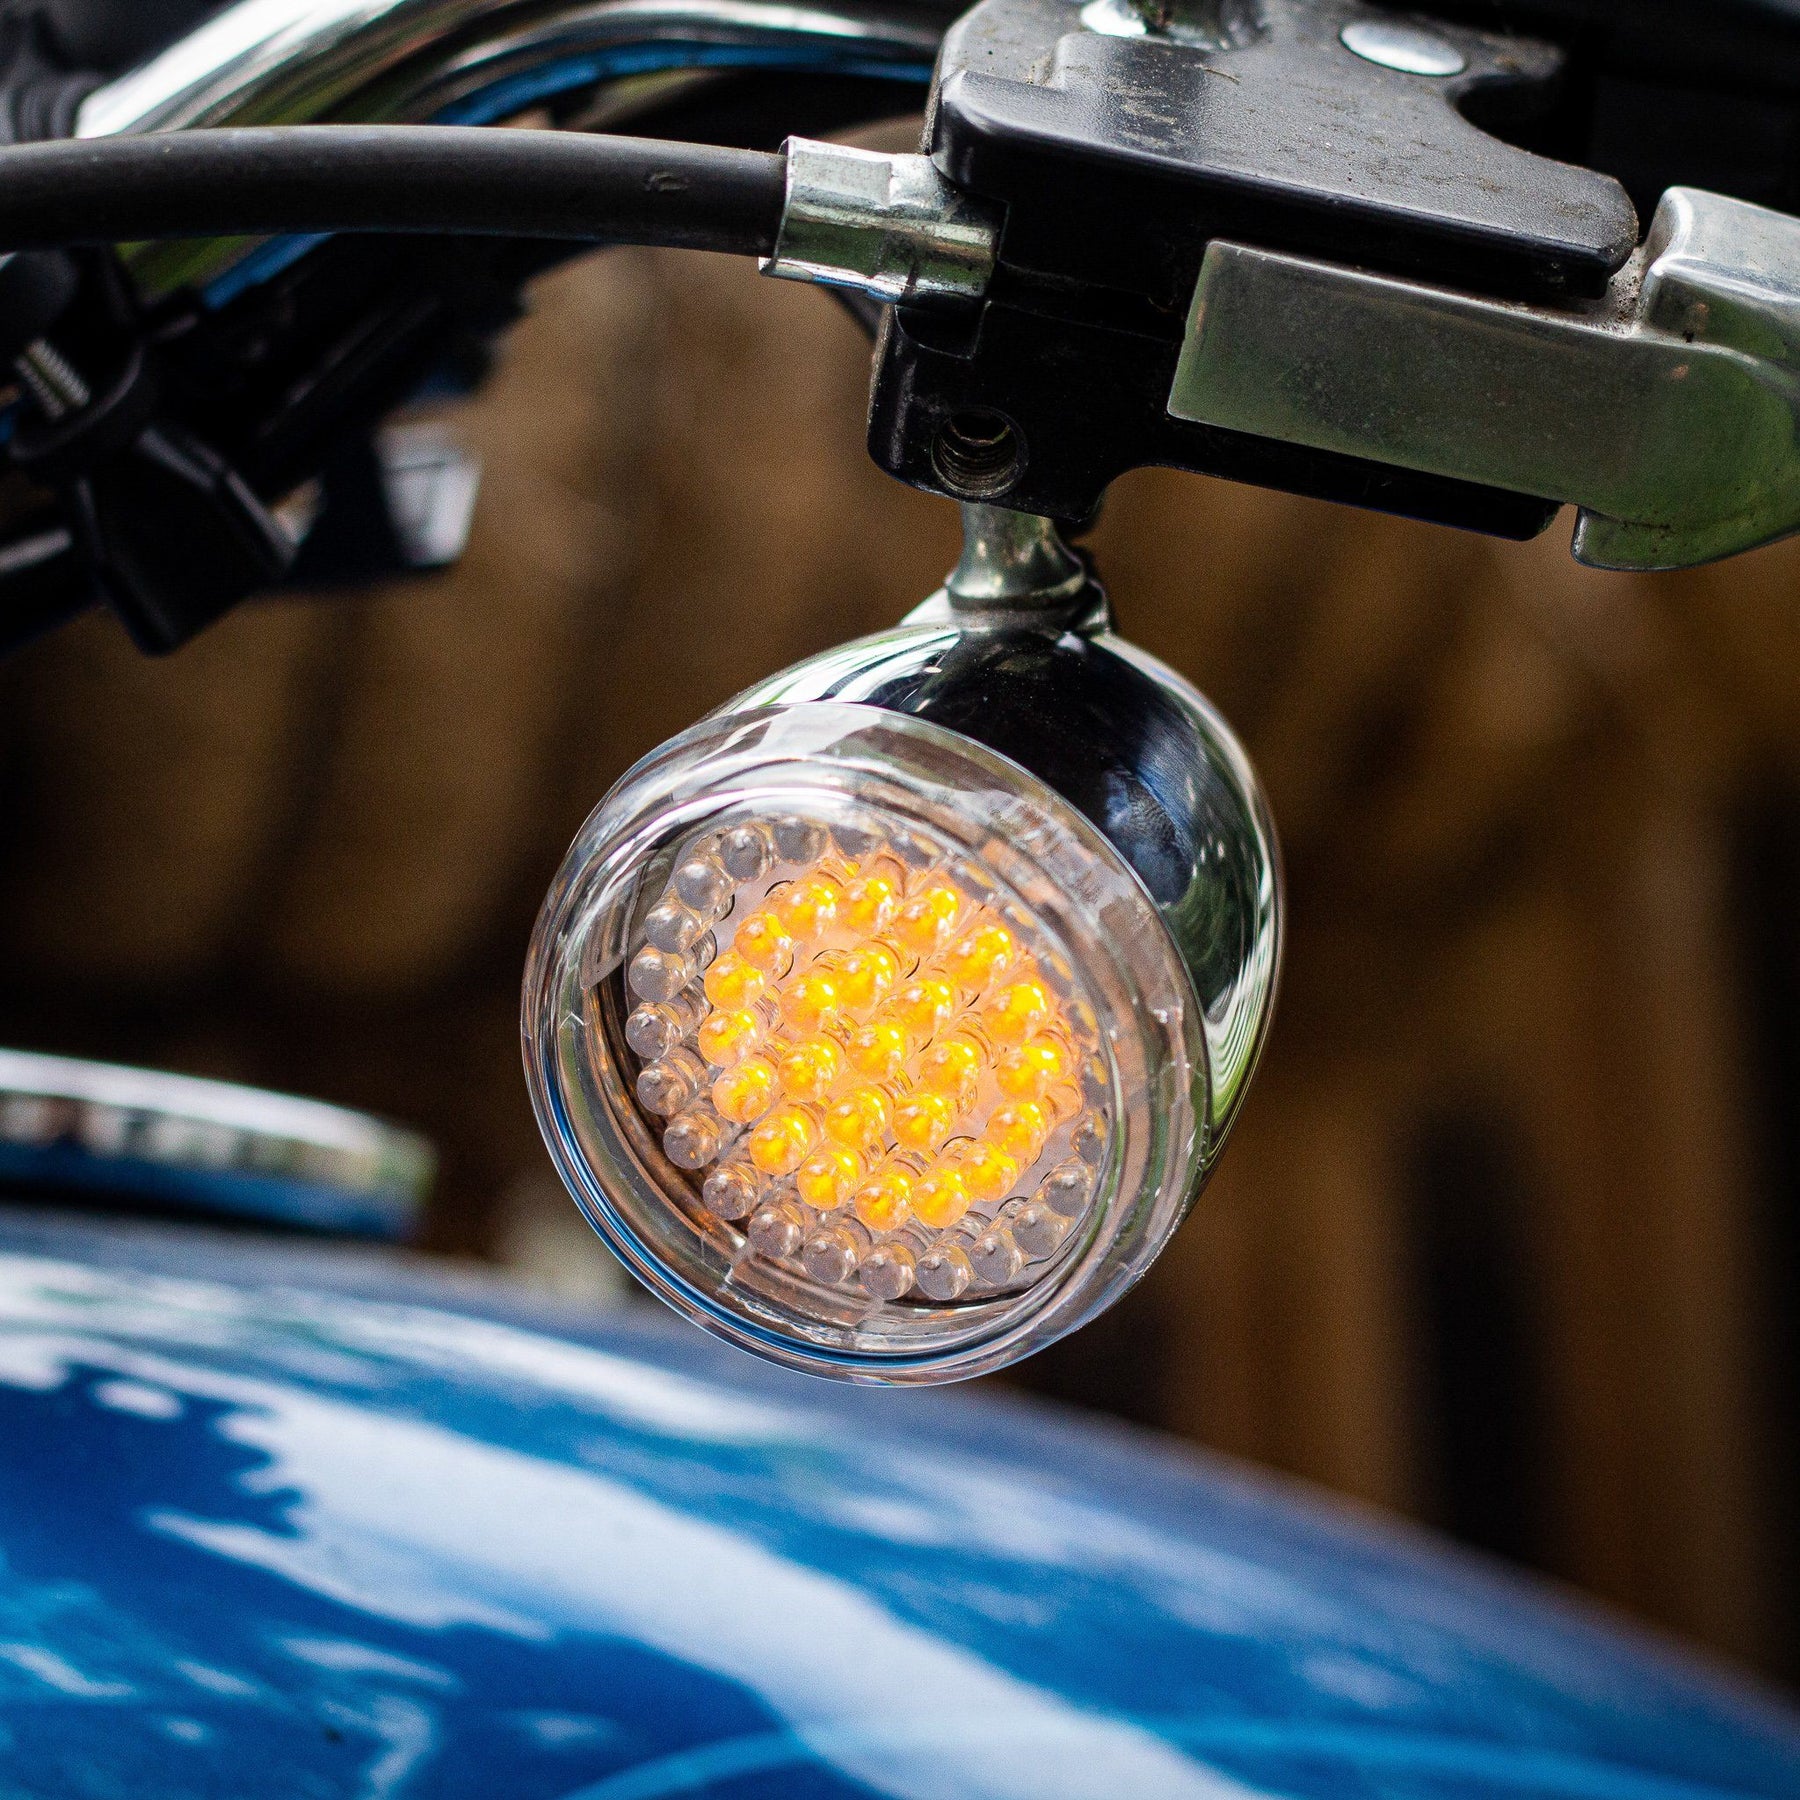 2” LED Turn Signal Kits - Eagle Lights 2” LED Turn Signal Kit For Harley Davidson - (Bikes W/ Rear Center Tail Light) -(2) Front Turn Signals, (2) Rear Red Turn Signals (1156)